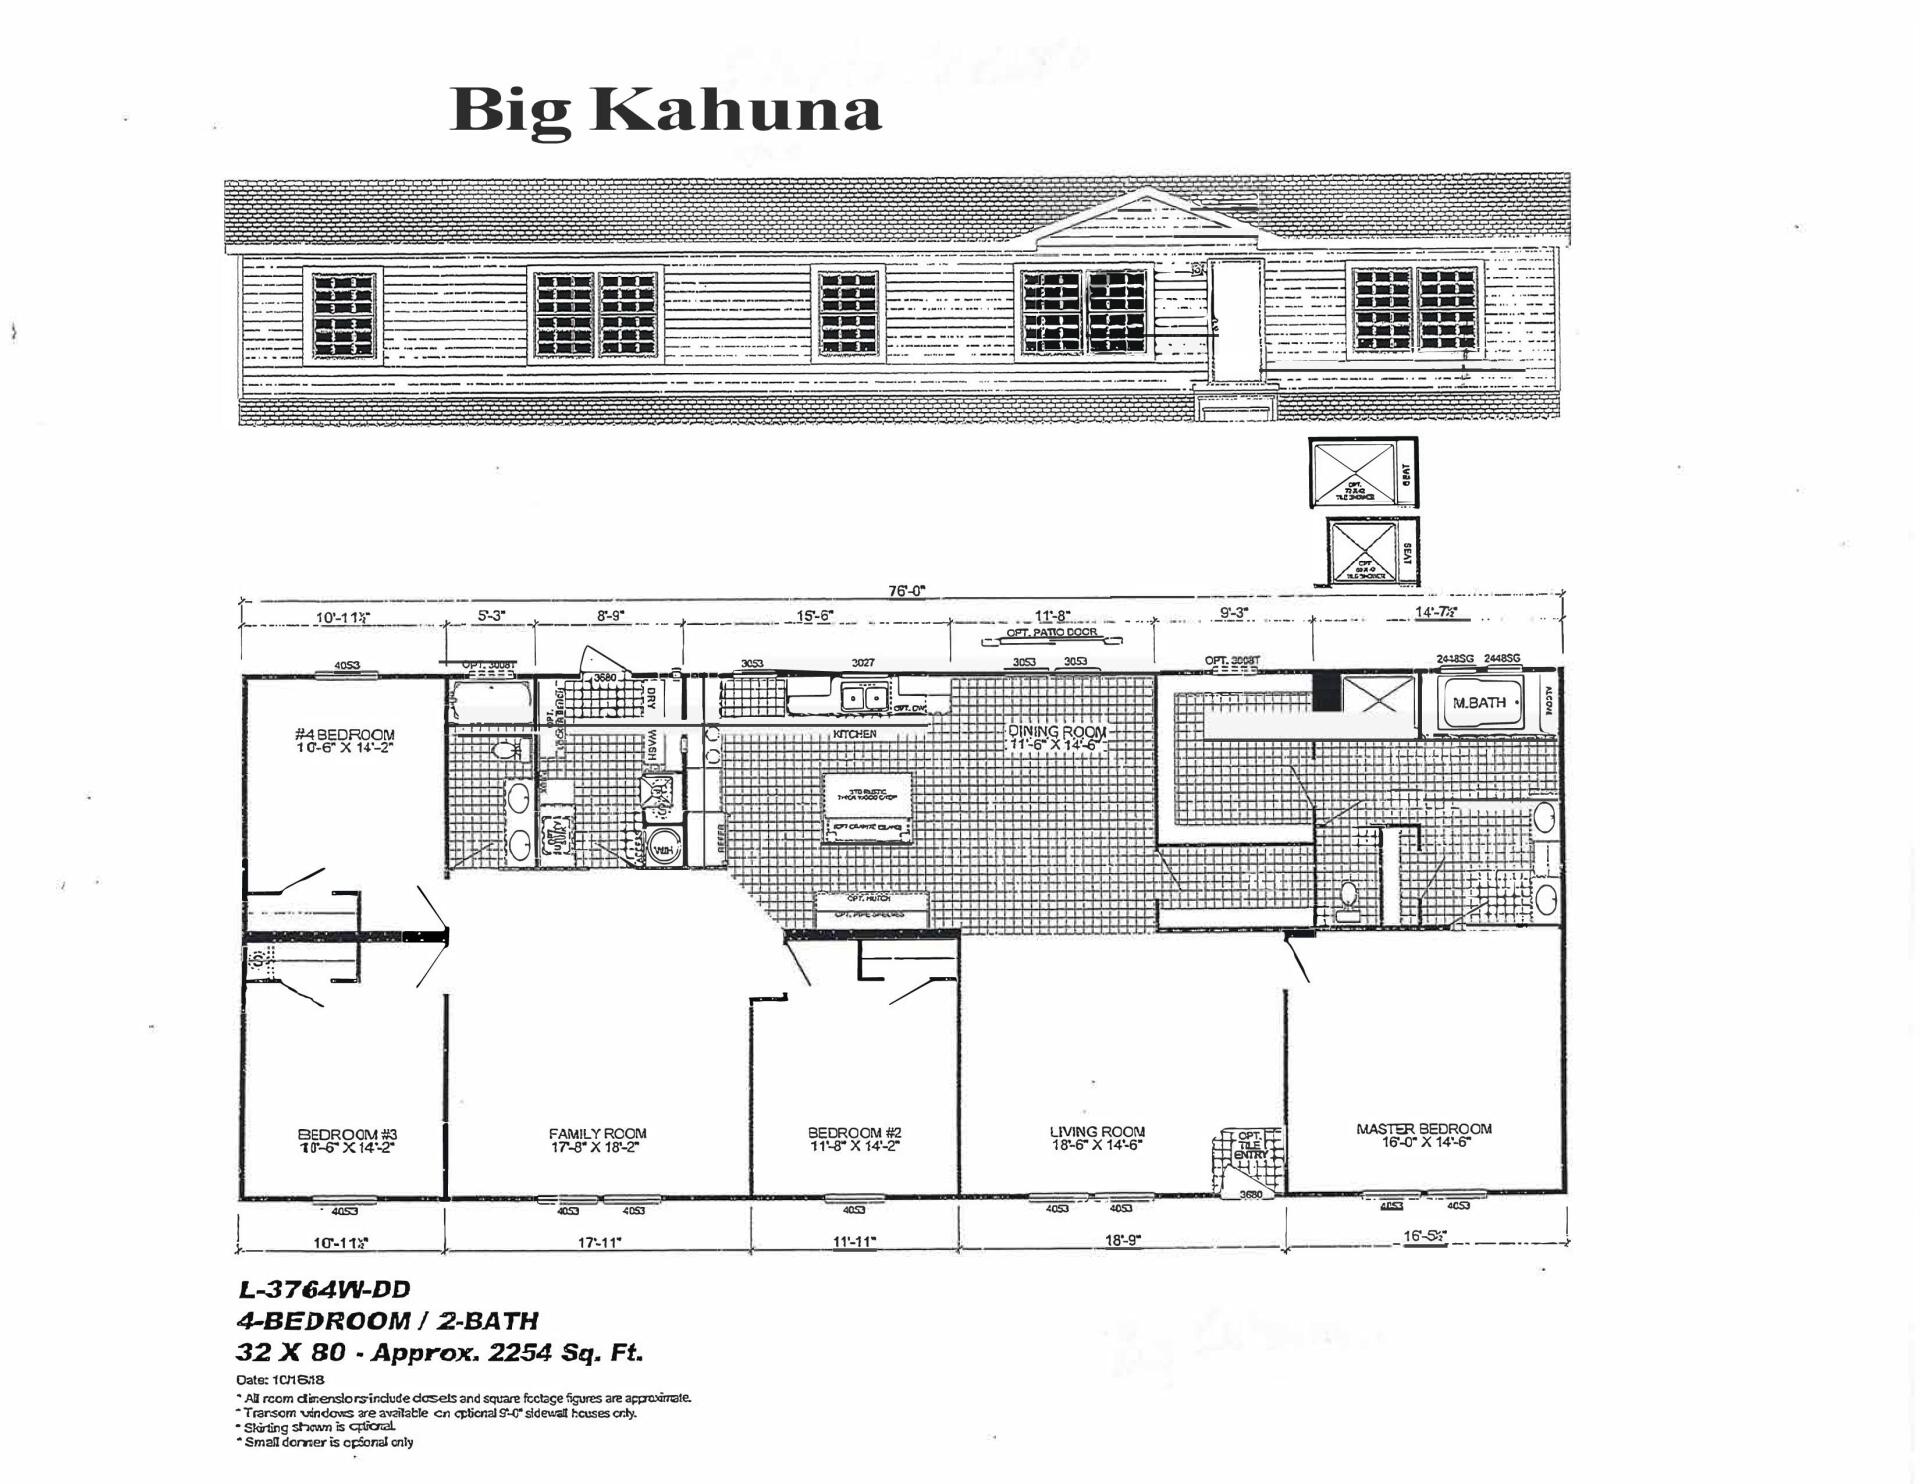 Big Kahuna Floor Plan